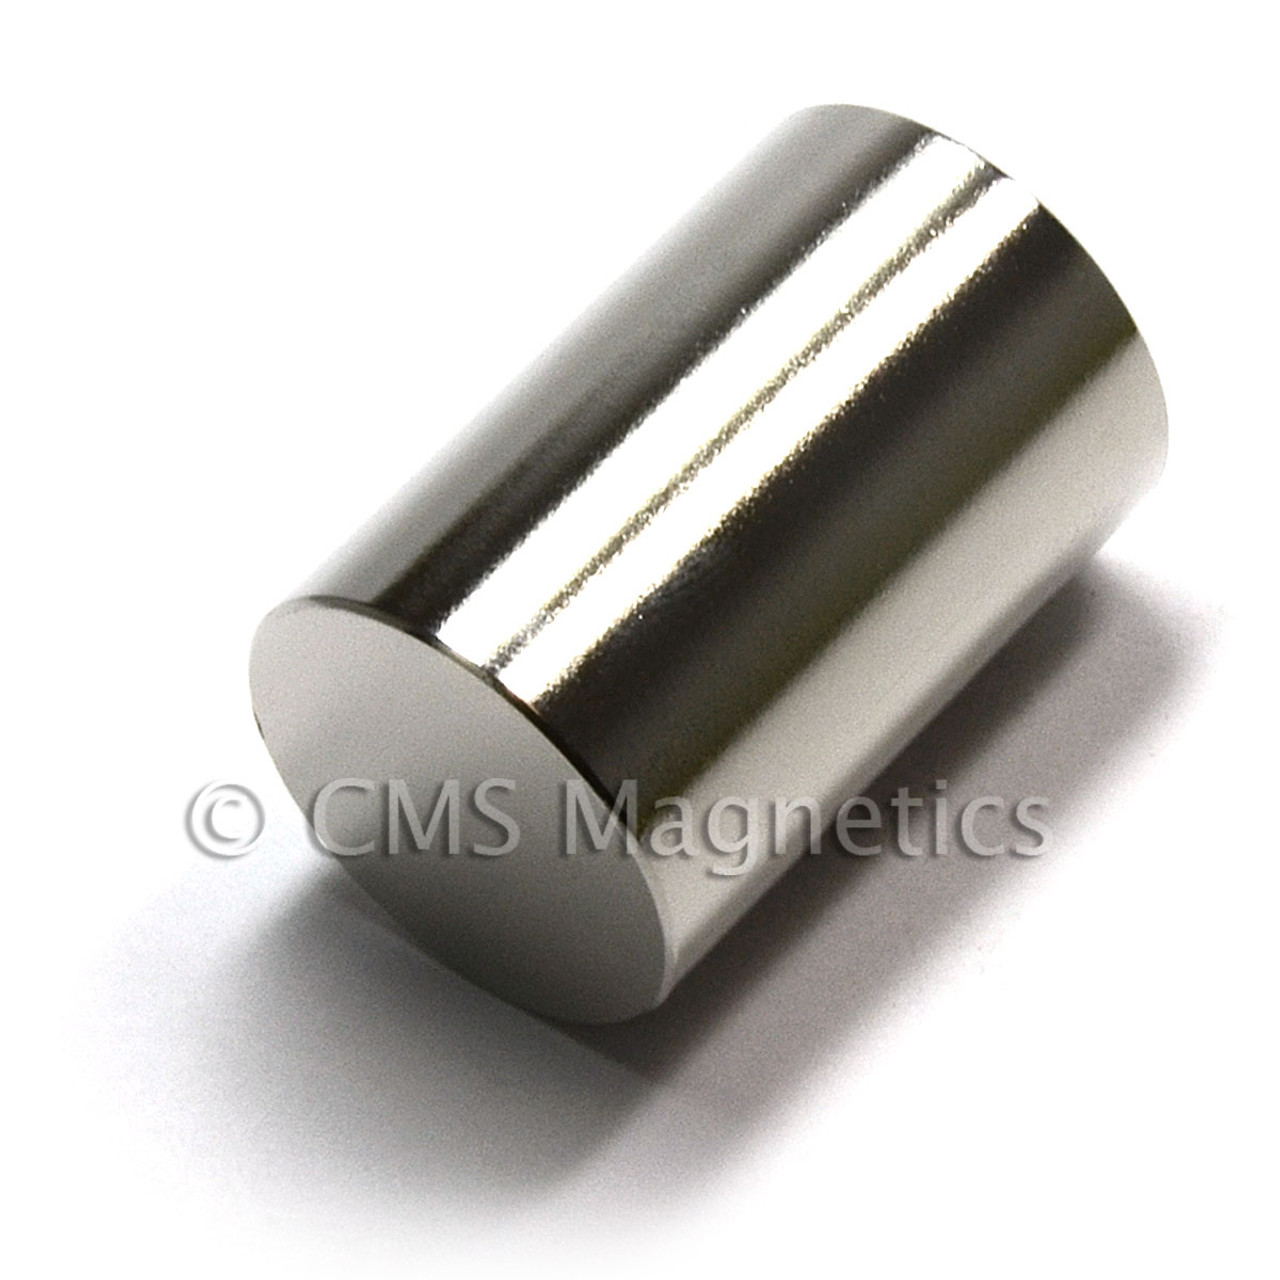 Dia 1x1 1/2" N52 Neodymium Magnet Powerful Cylinder Magnet